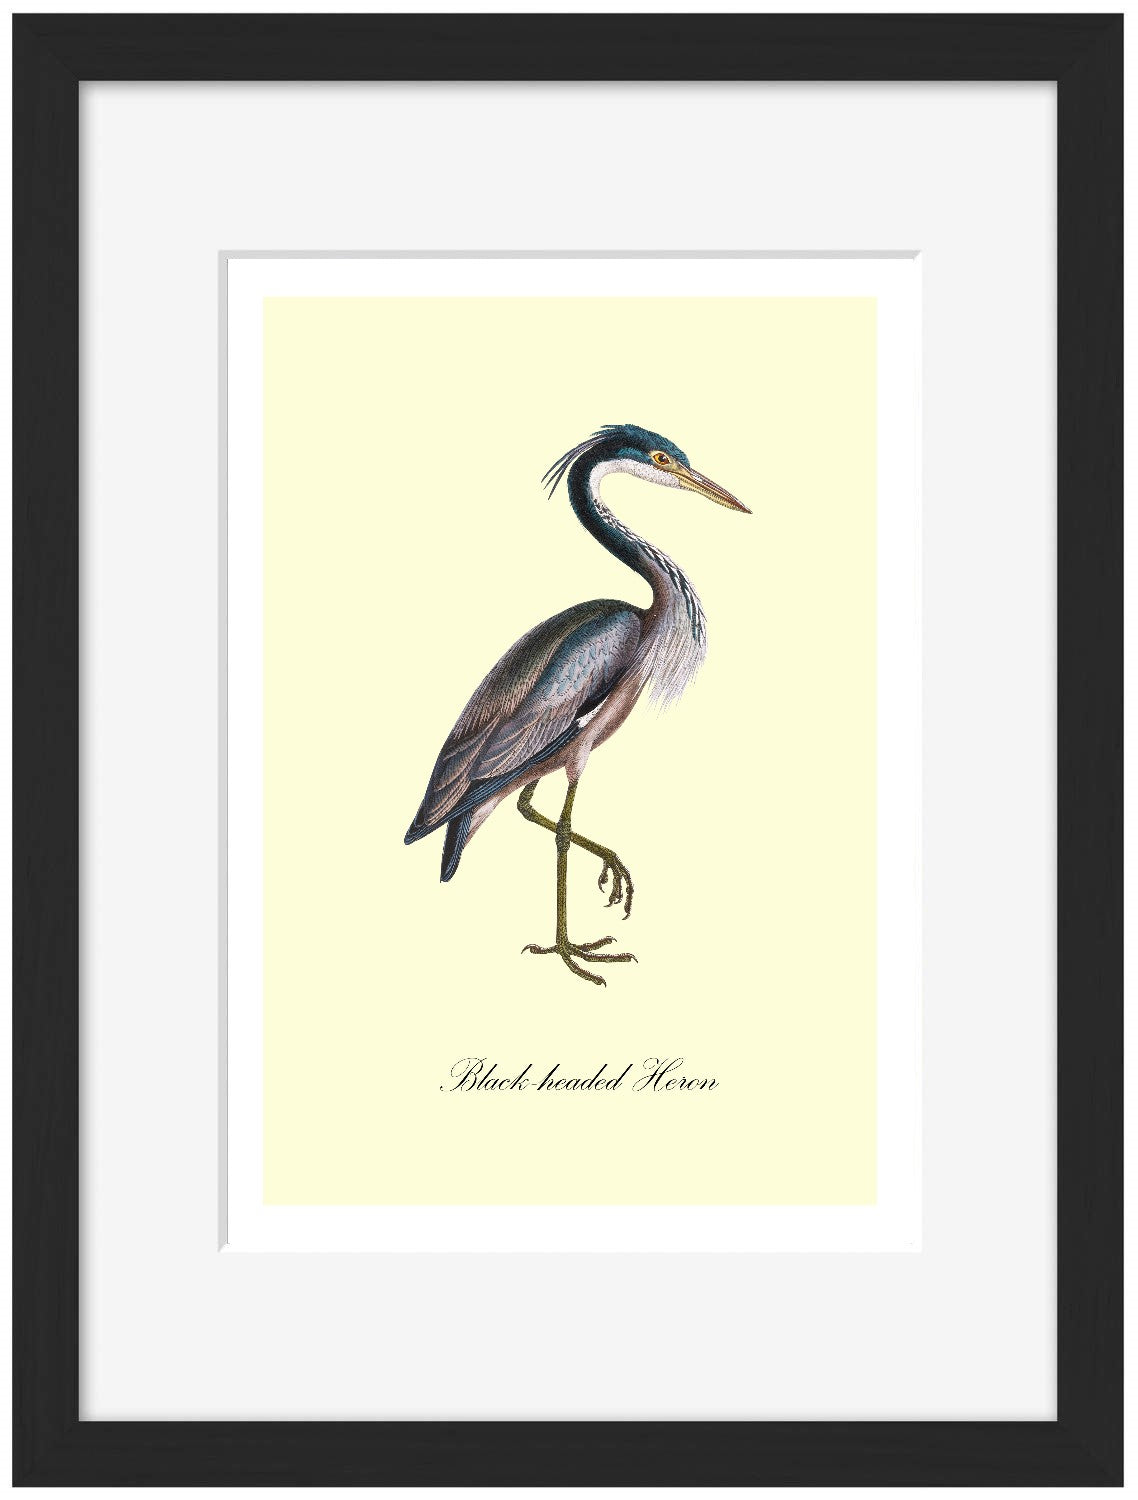 Black-Headed Heron-birds, print-Framed Print-30 x 40 cm-BLUE SHAKER